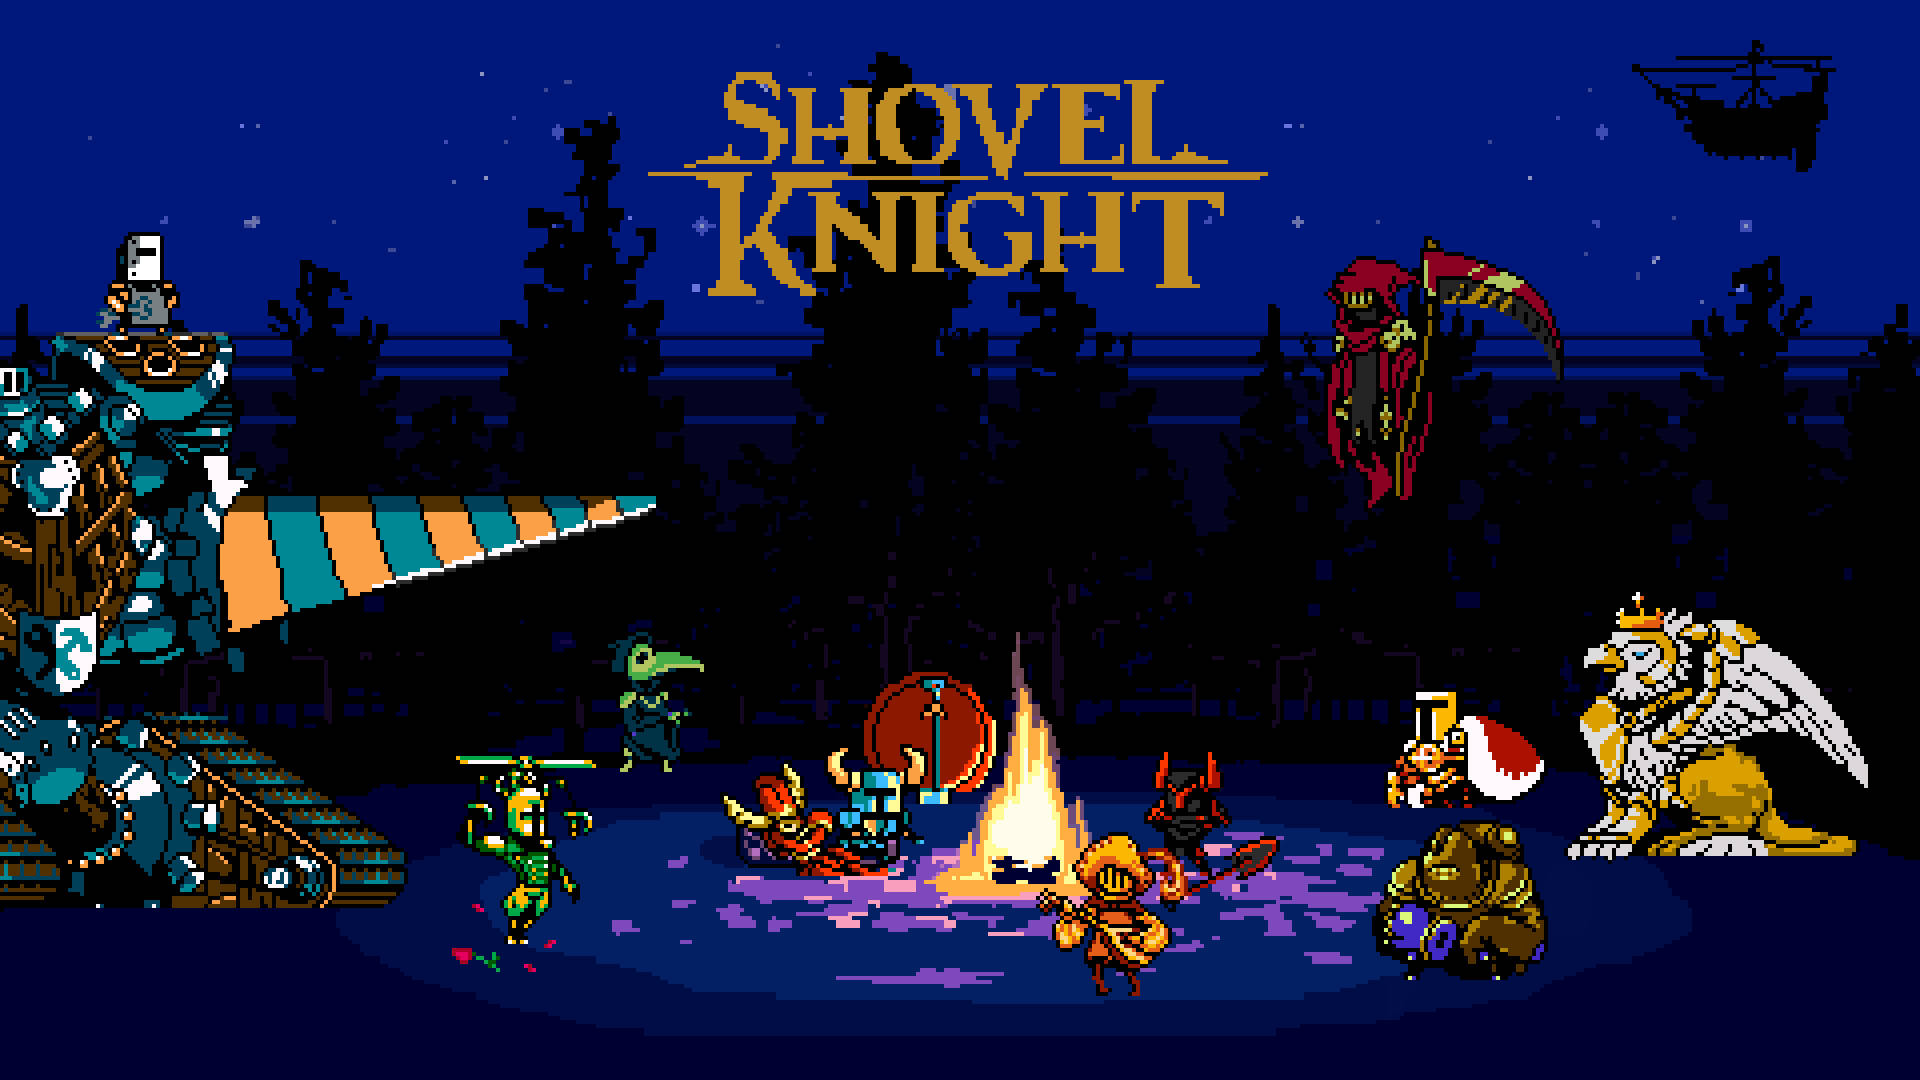 Shovel Knight Retro Pixel Art Background